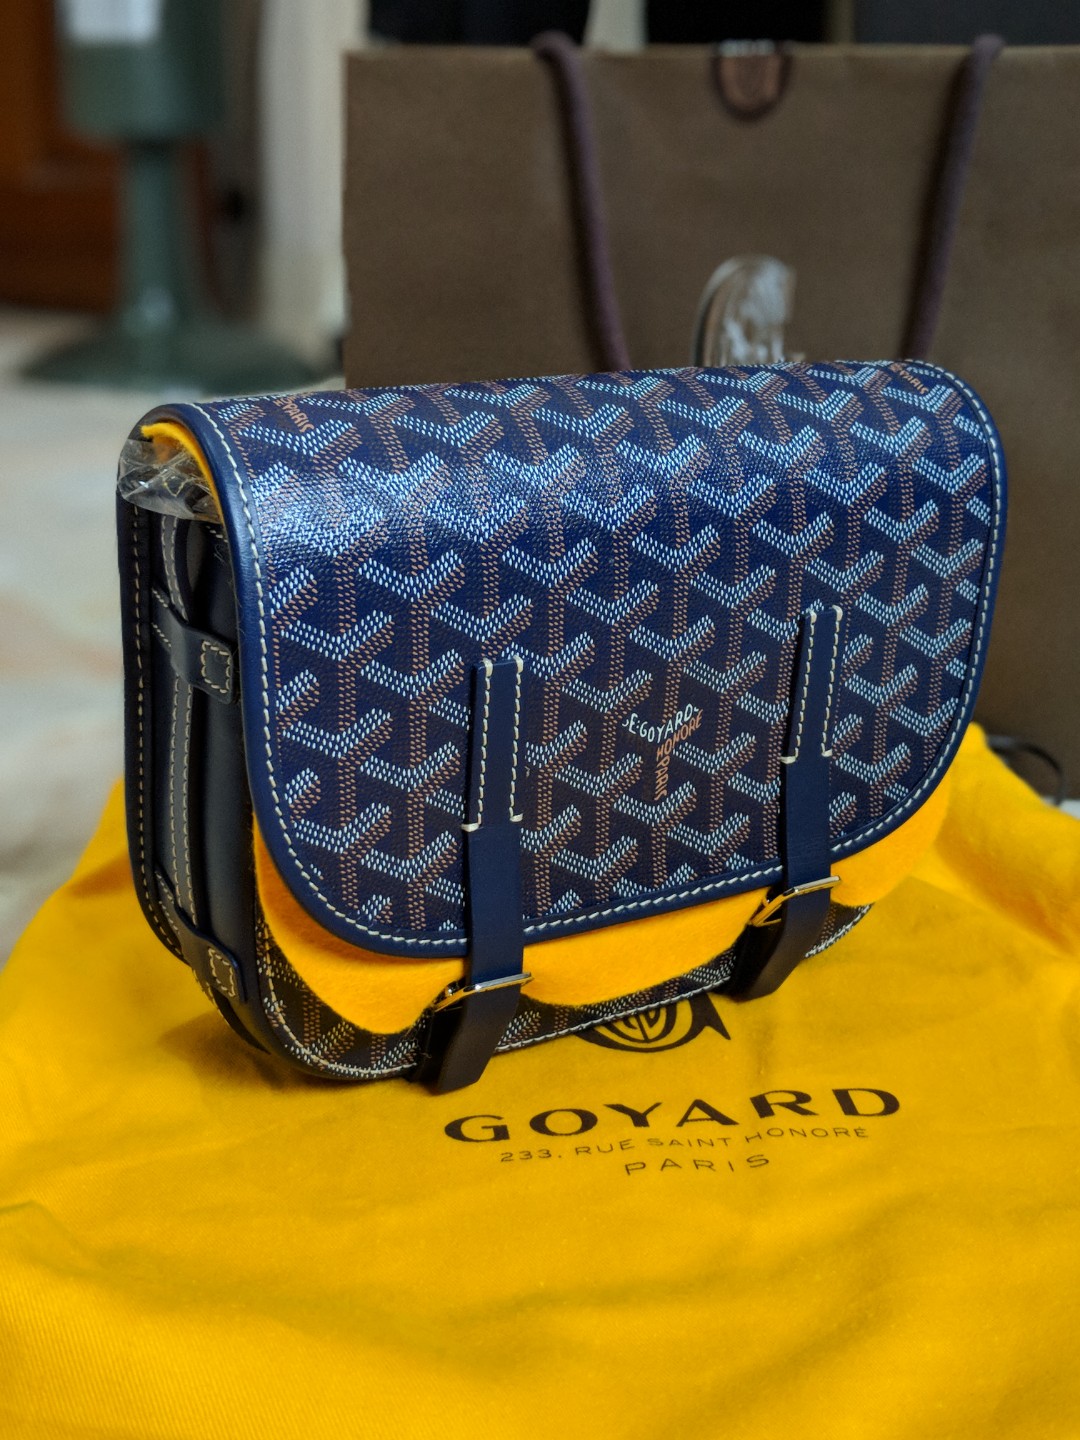 QC] Goyard Belvedere Bag, ¥248